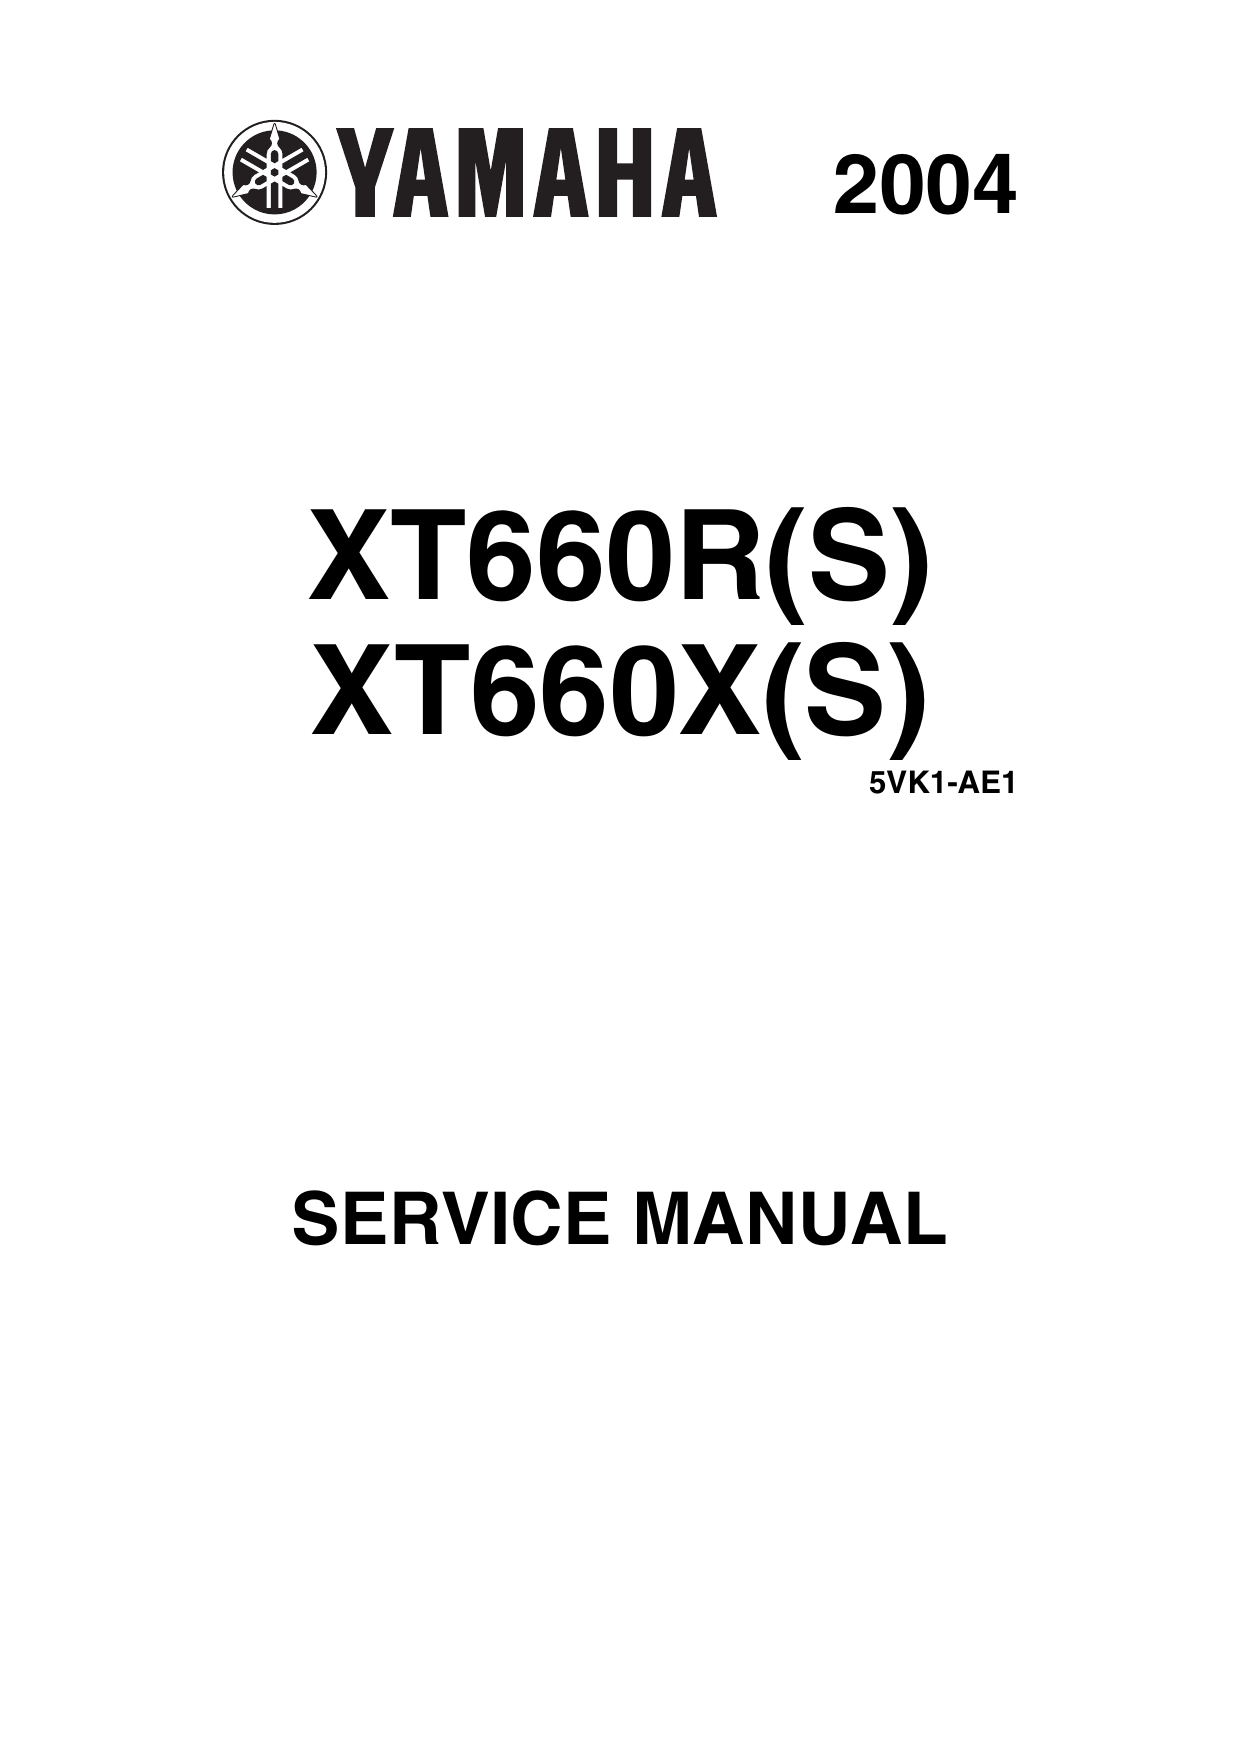 2004 Yamaha XT660R(S), XT660X(S) service and repair manual Preview image 1